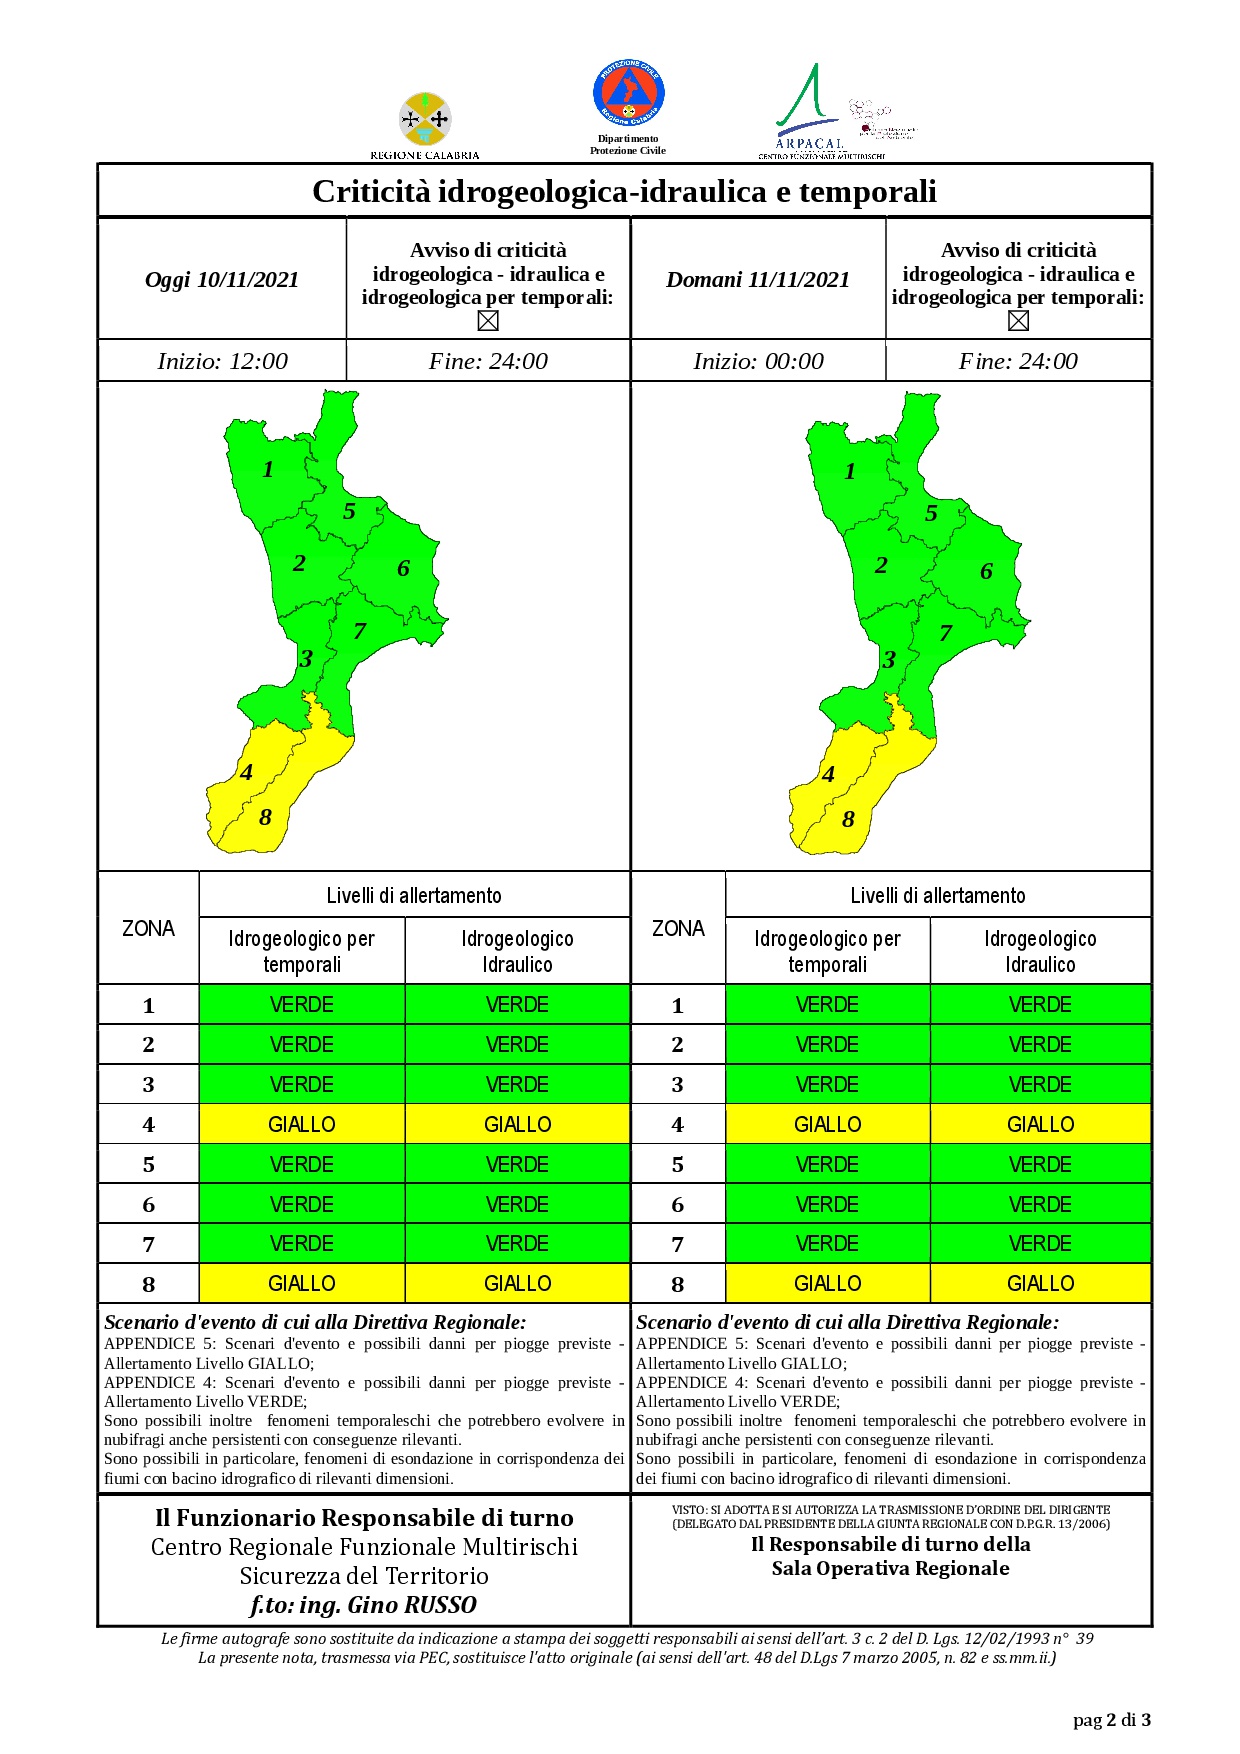 Criticità idrogeologica-idraulica e temporali in Calabria 10-11-2021